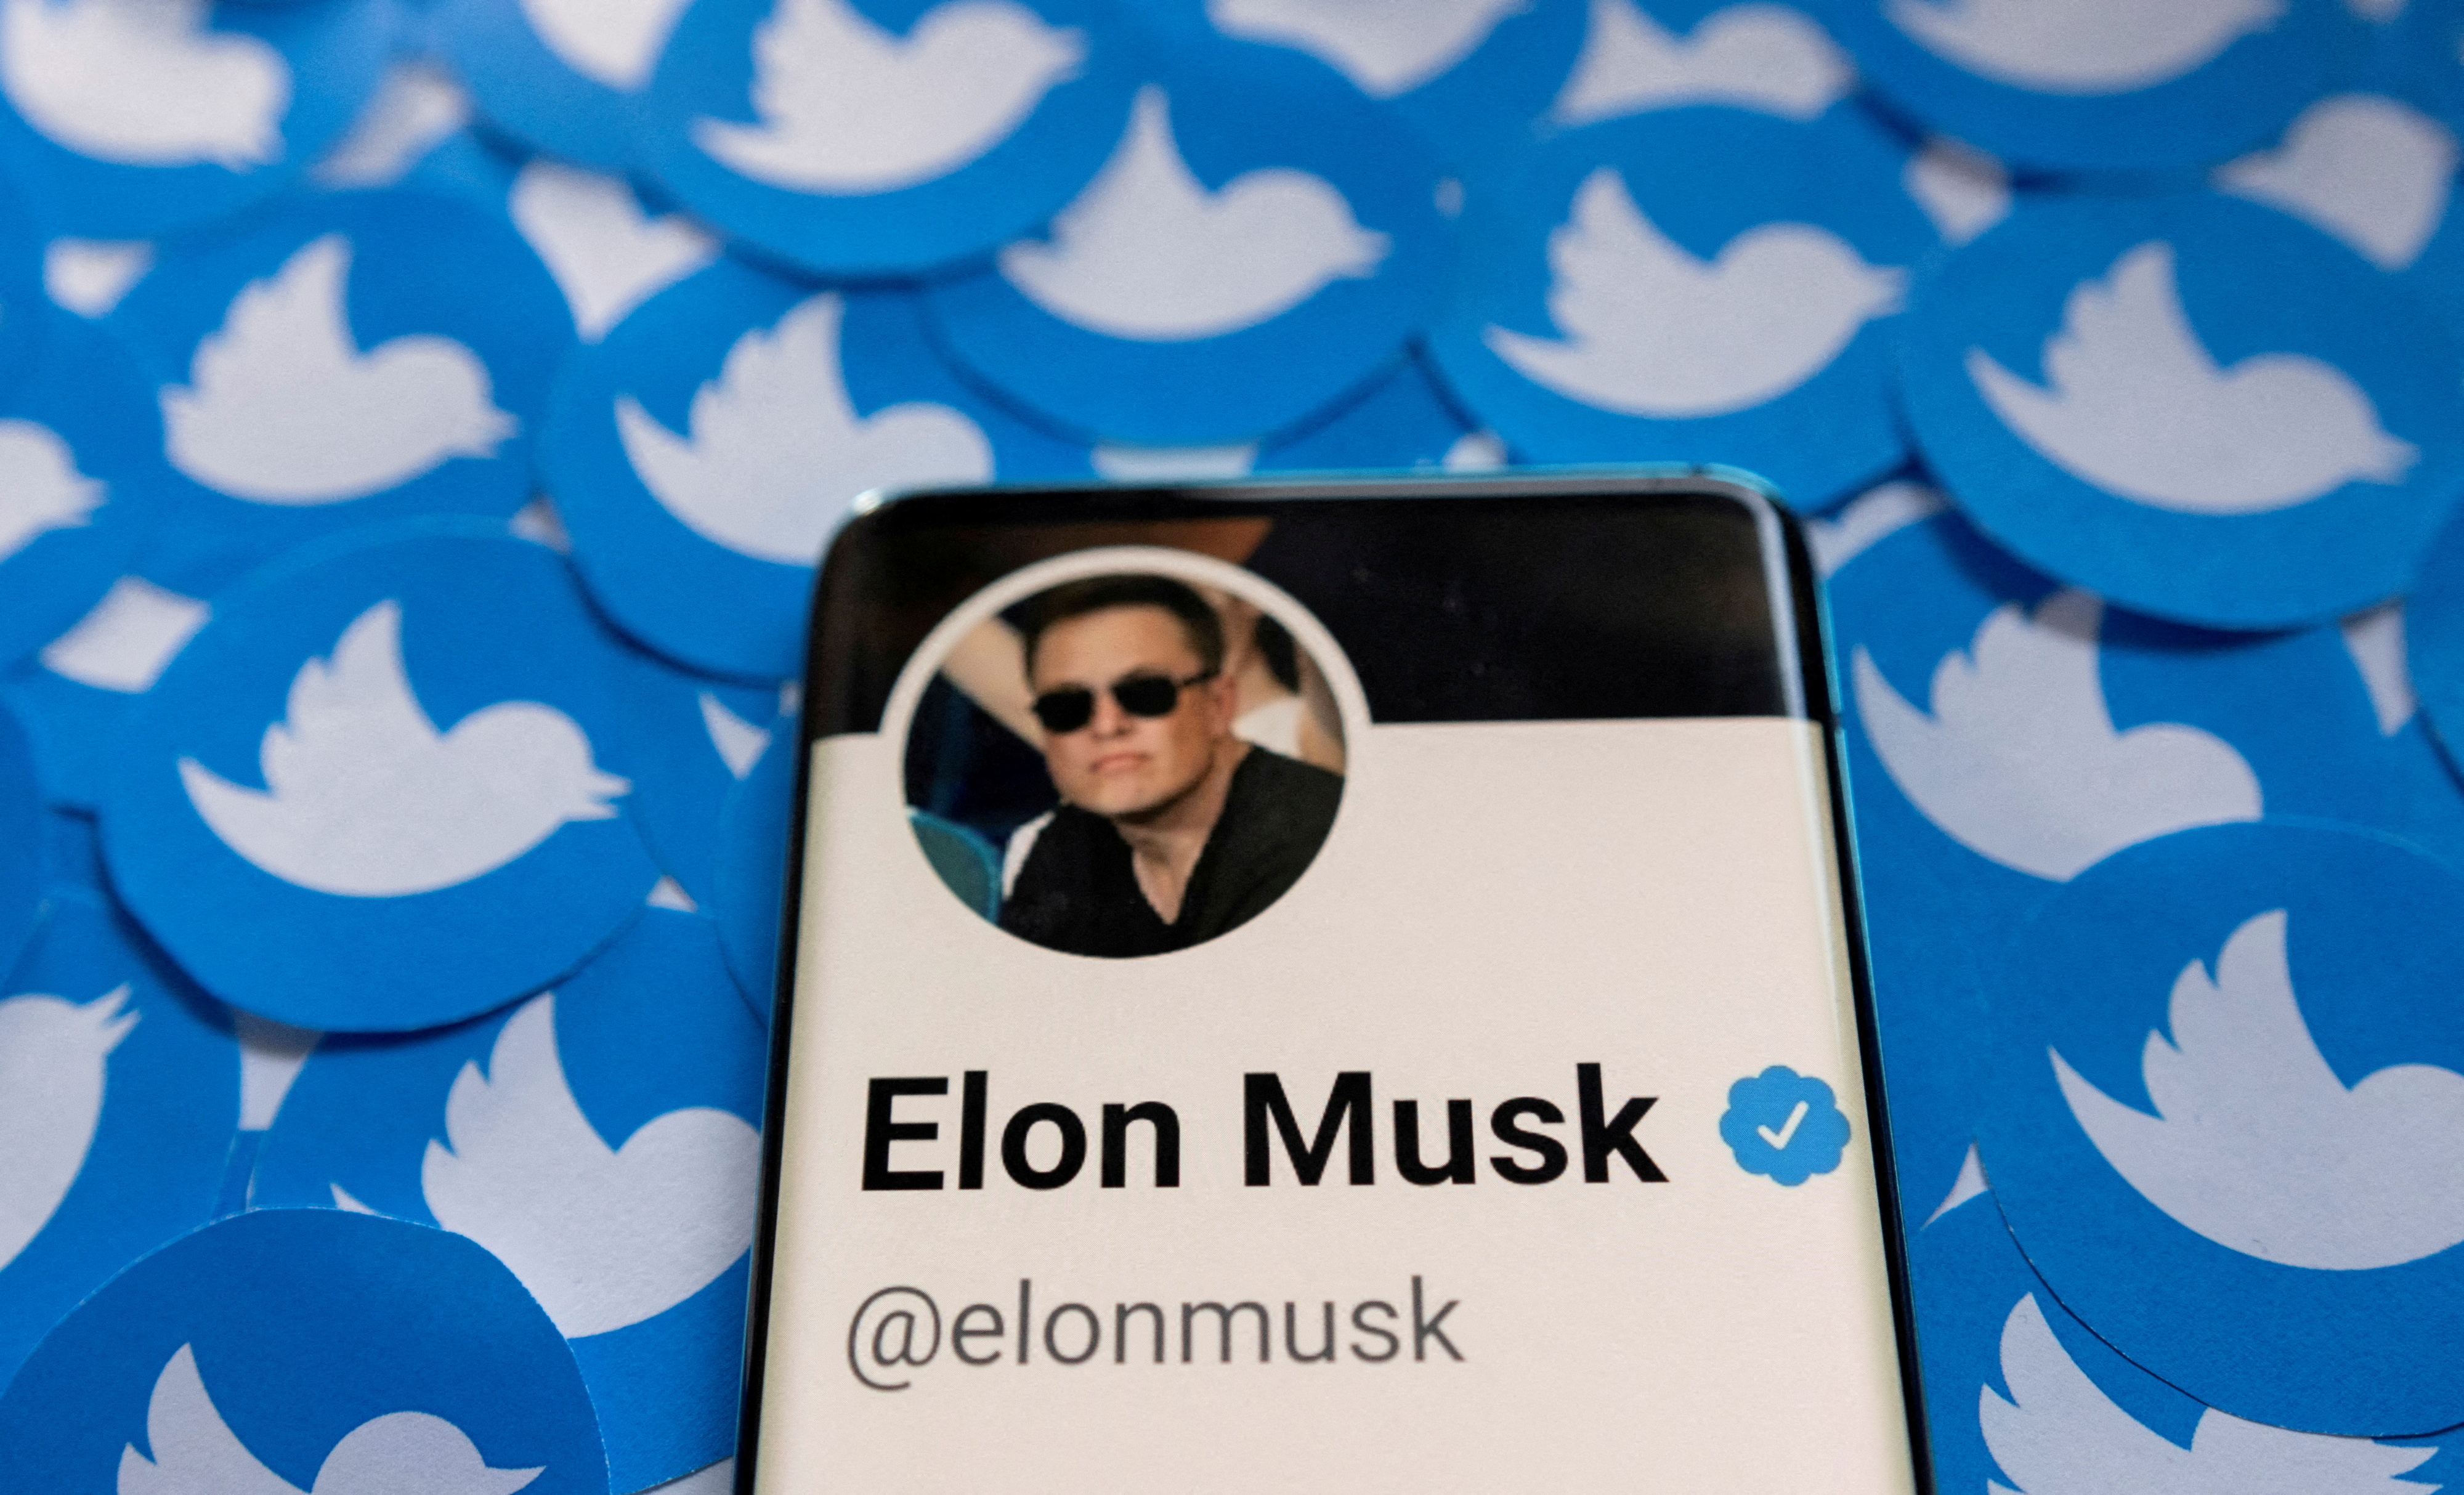 Elon Musk haria varios cambios a Twitter (Foto: REUTERS/Dado Ruvic/Illustration/File Photo)